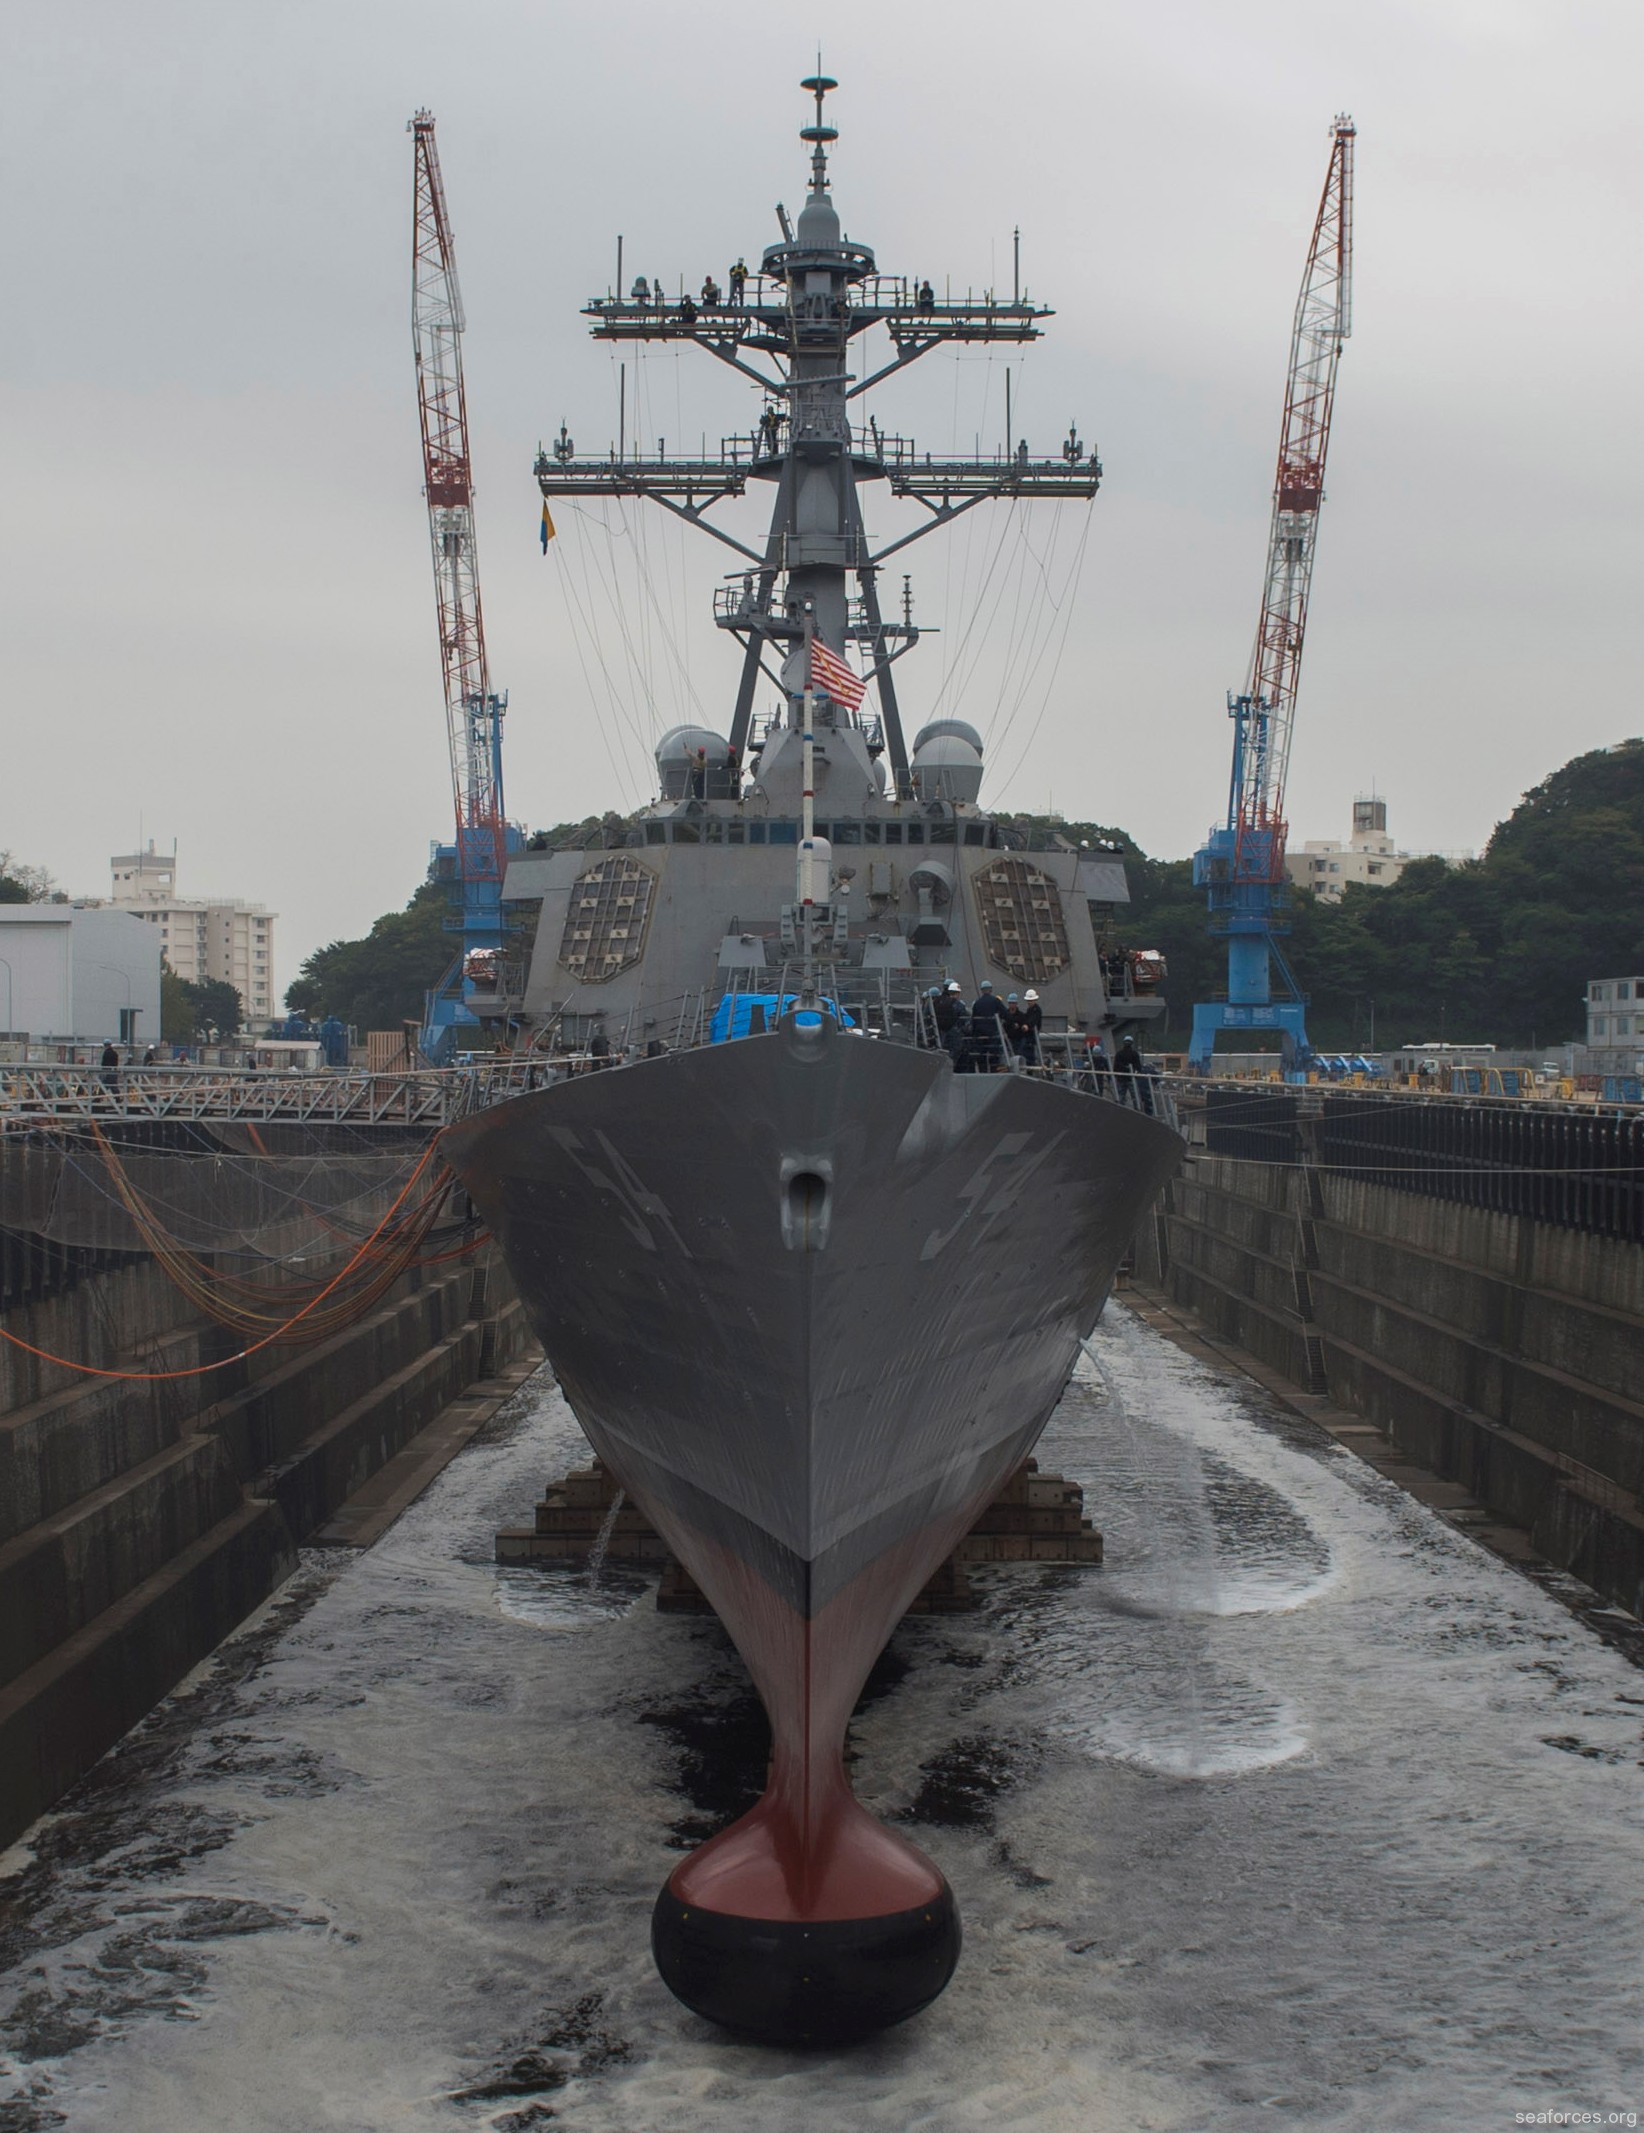 ddg-54 uss curtis wilbur destroyer us navy 25 dry dock yokosuka japan